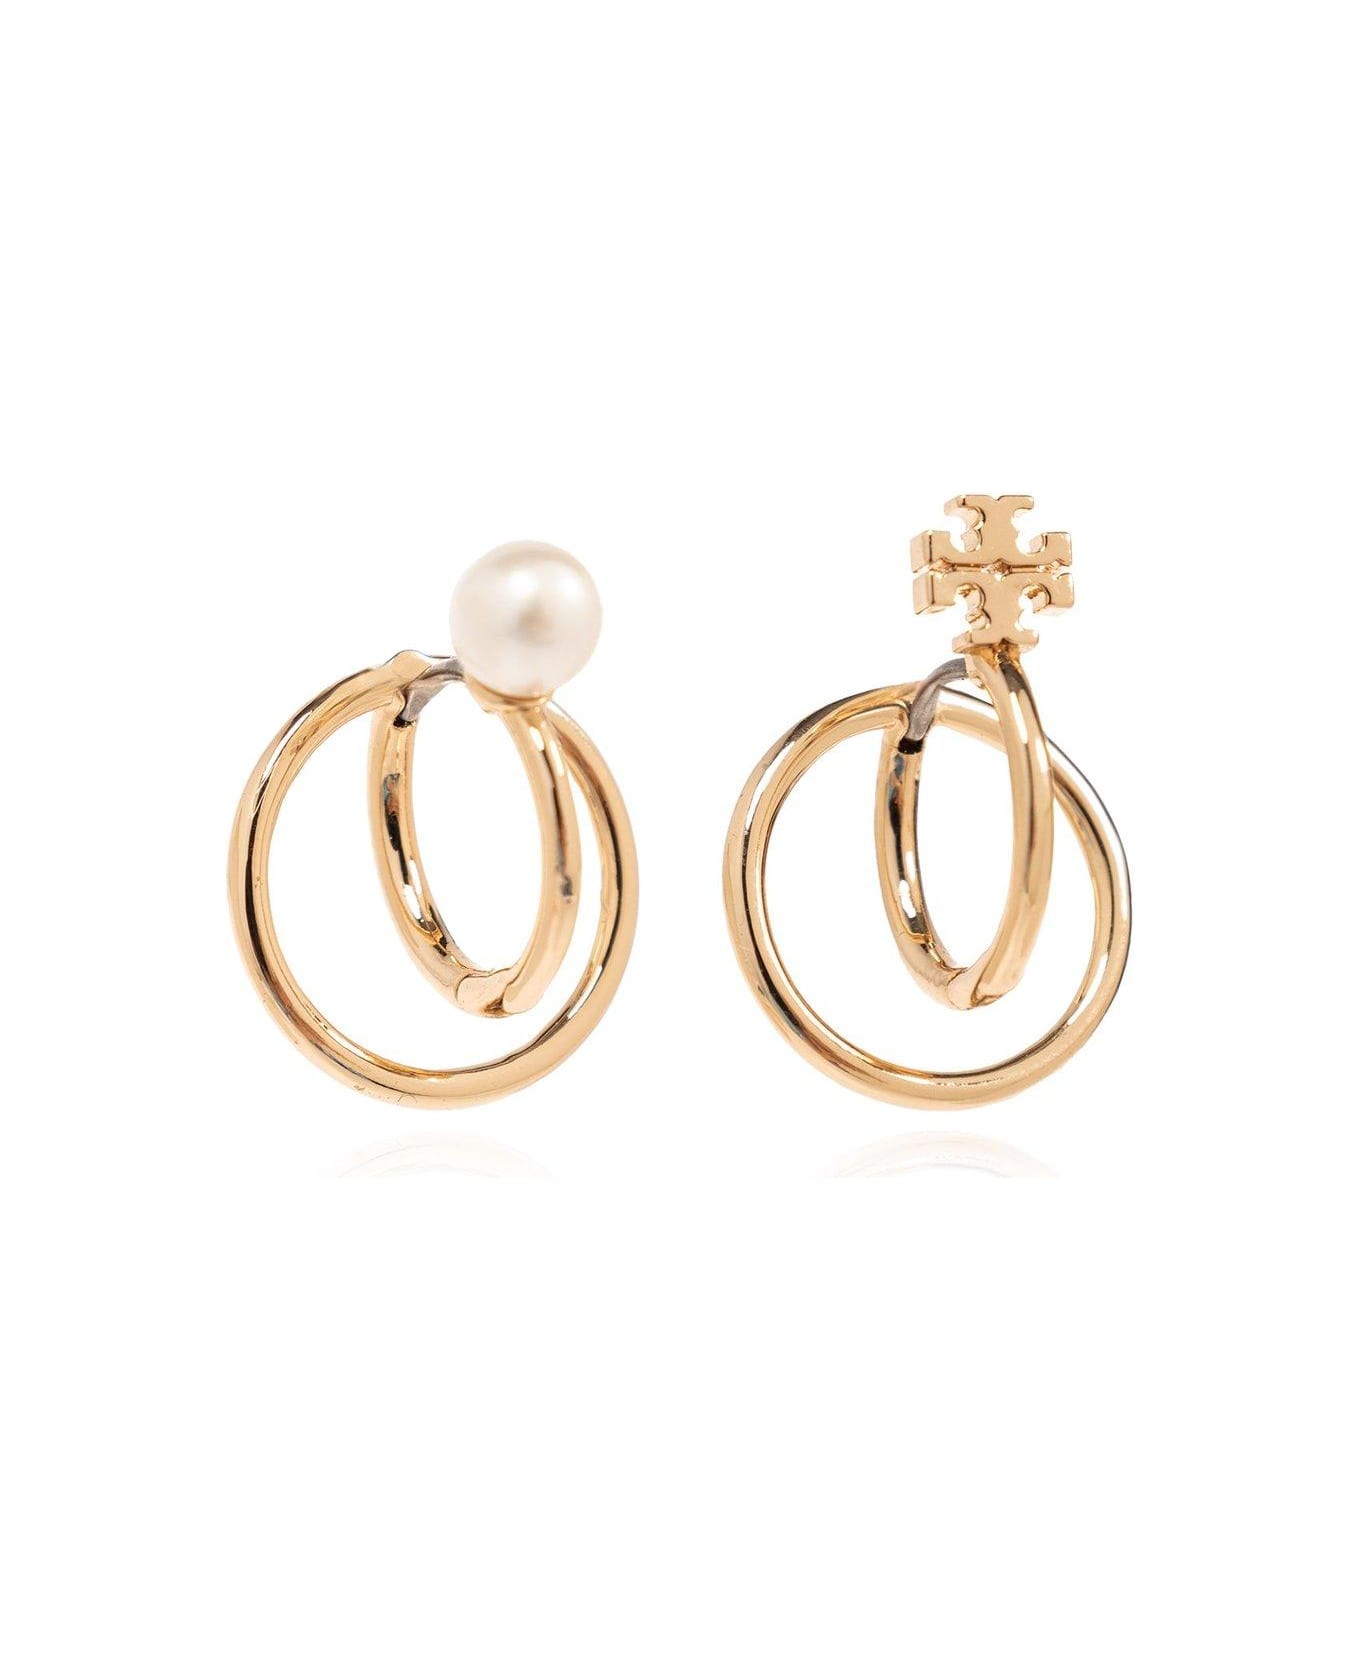 Tory Burch Kira Pearl Double Hoop Earrings - Gold/cream